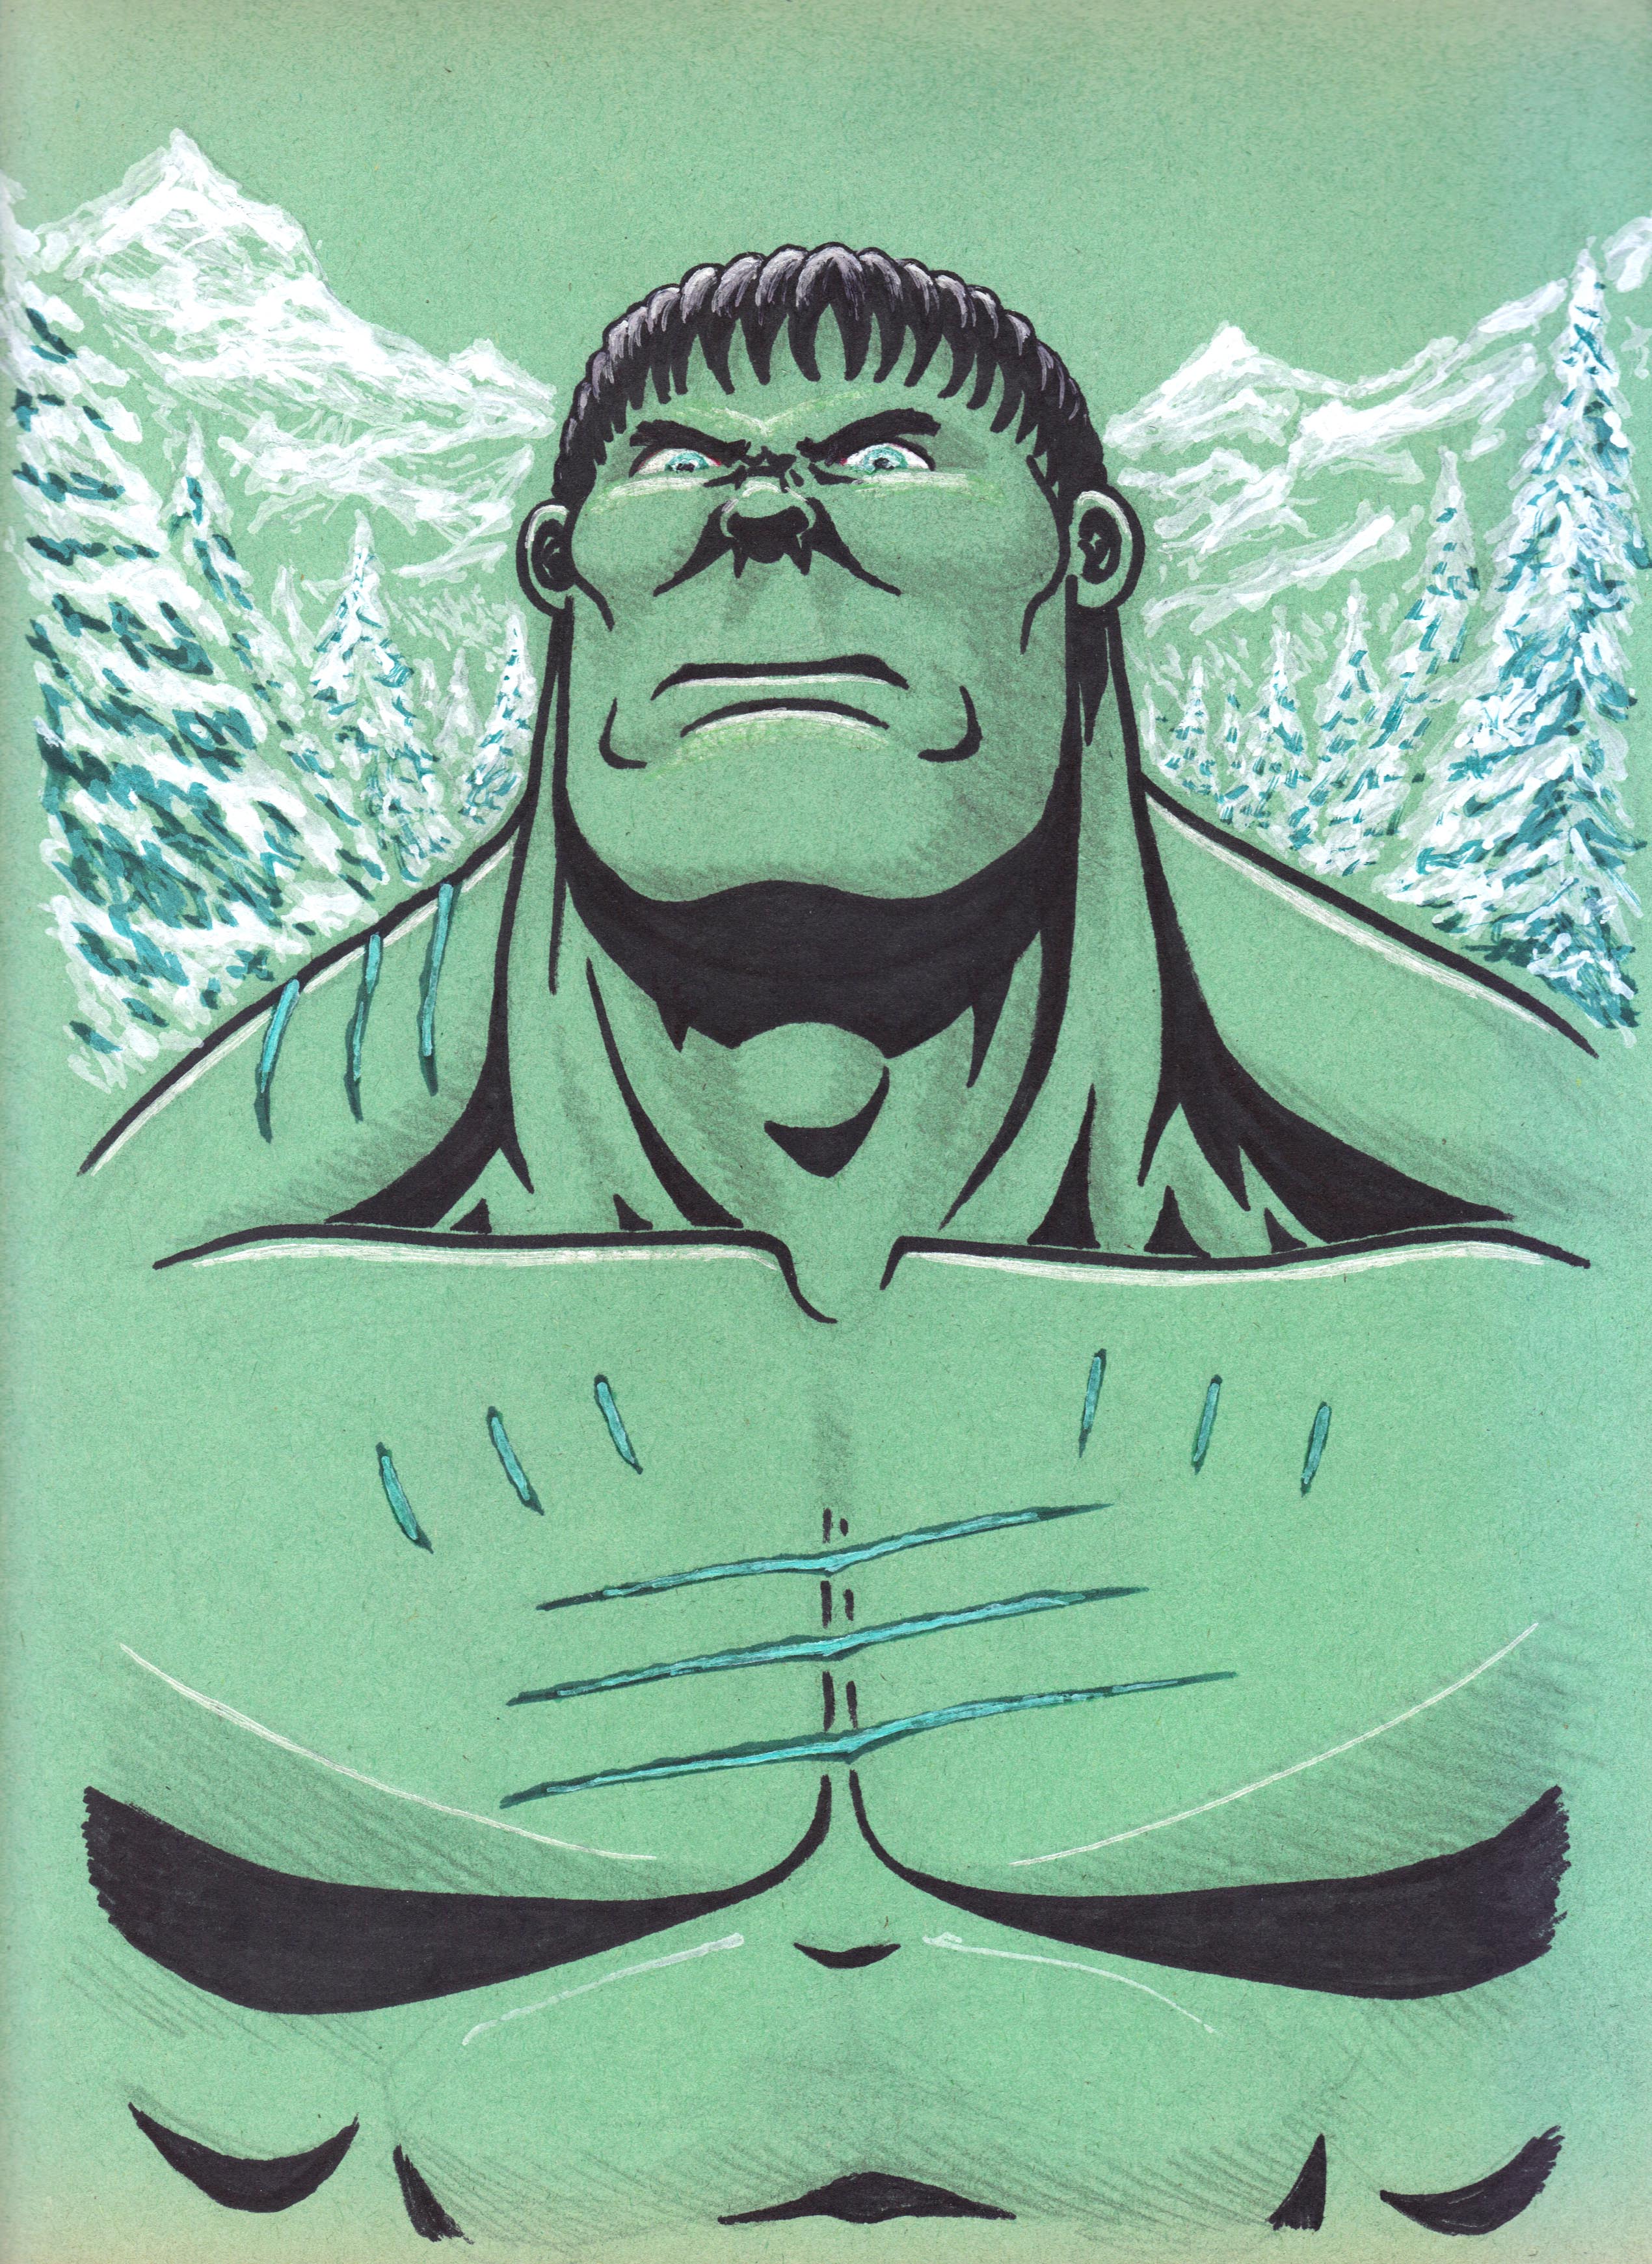 the Hulk sketch